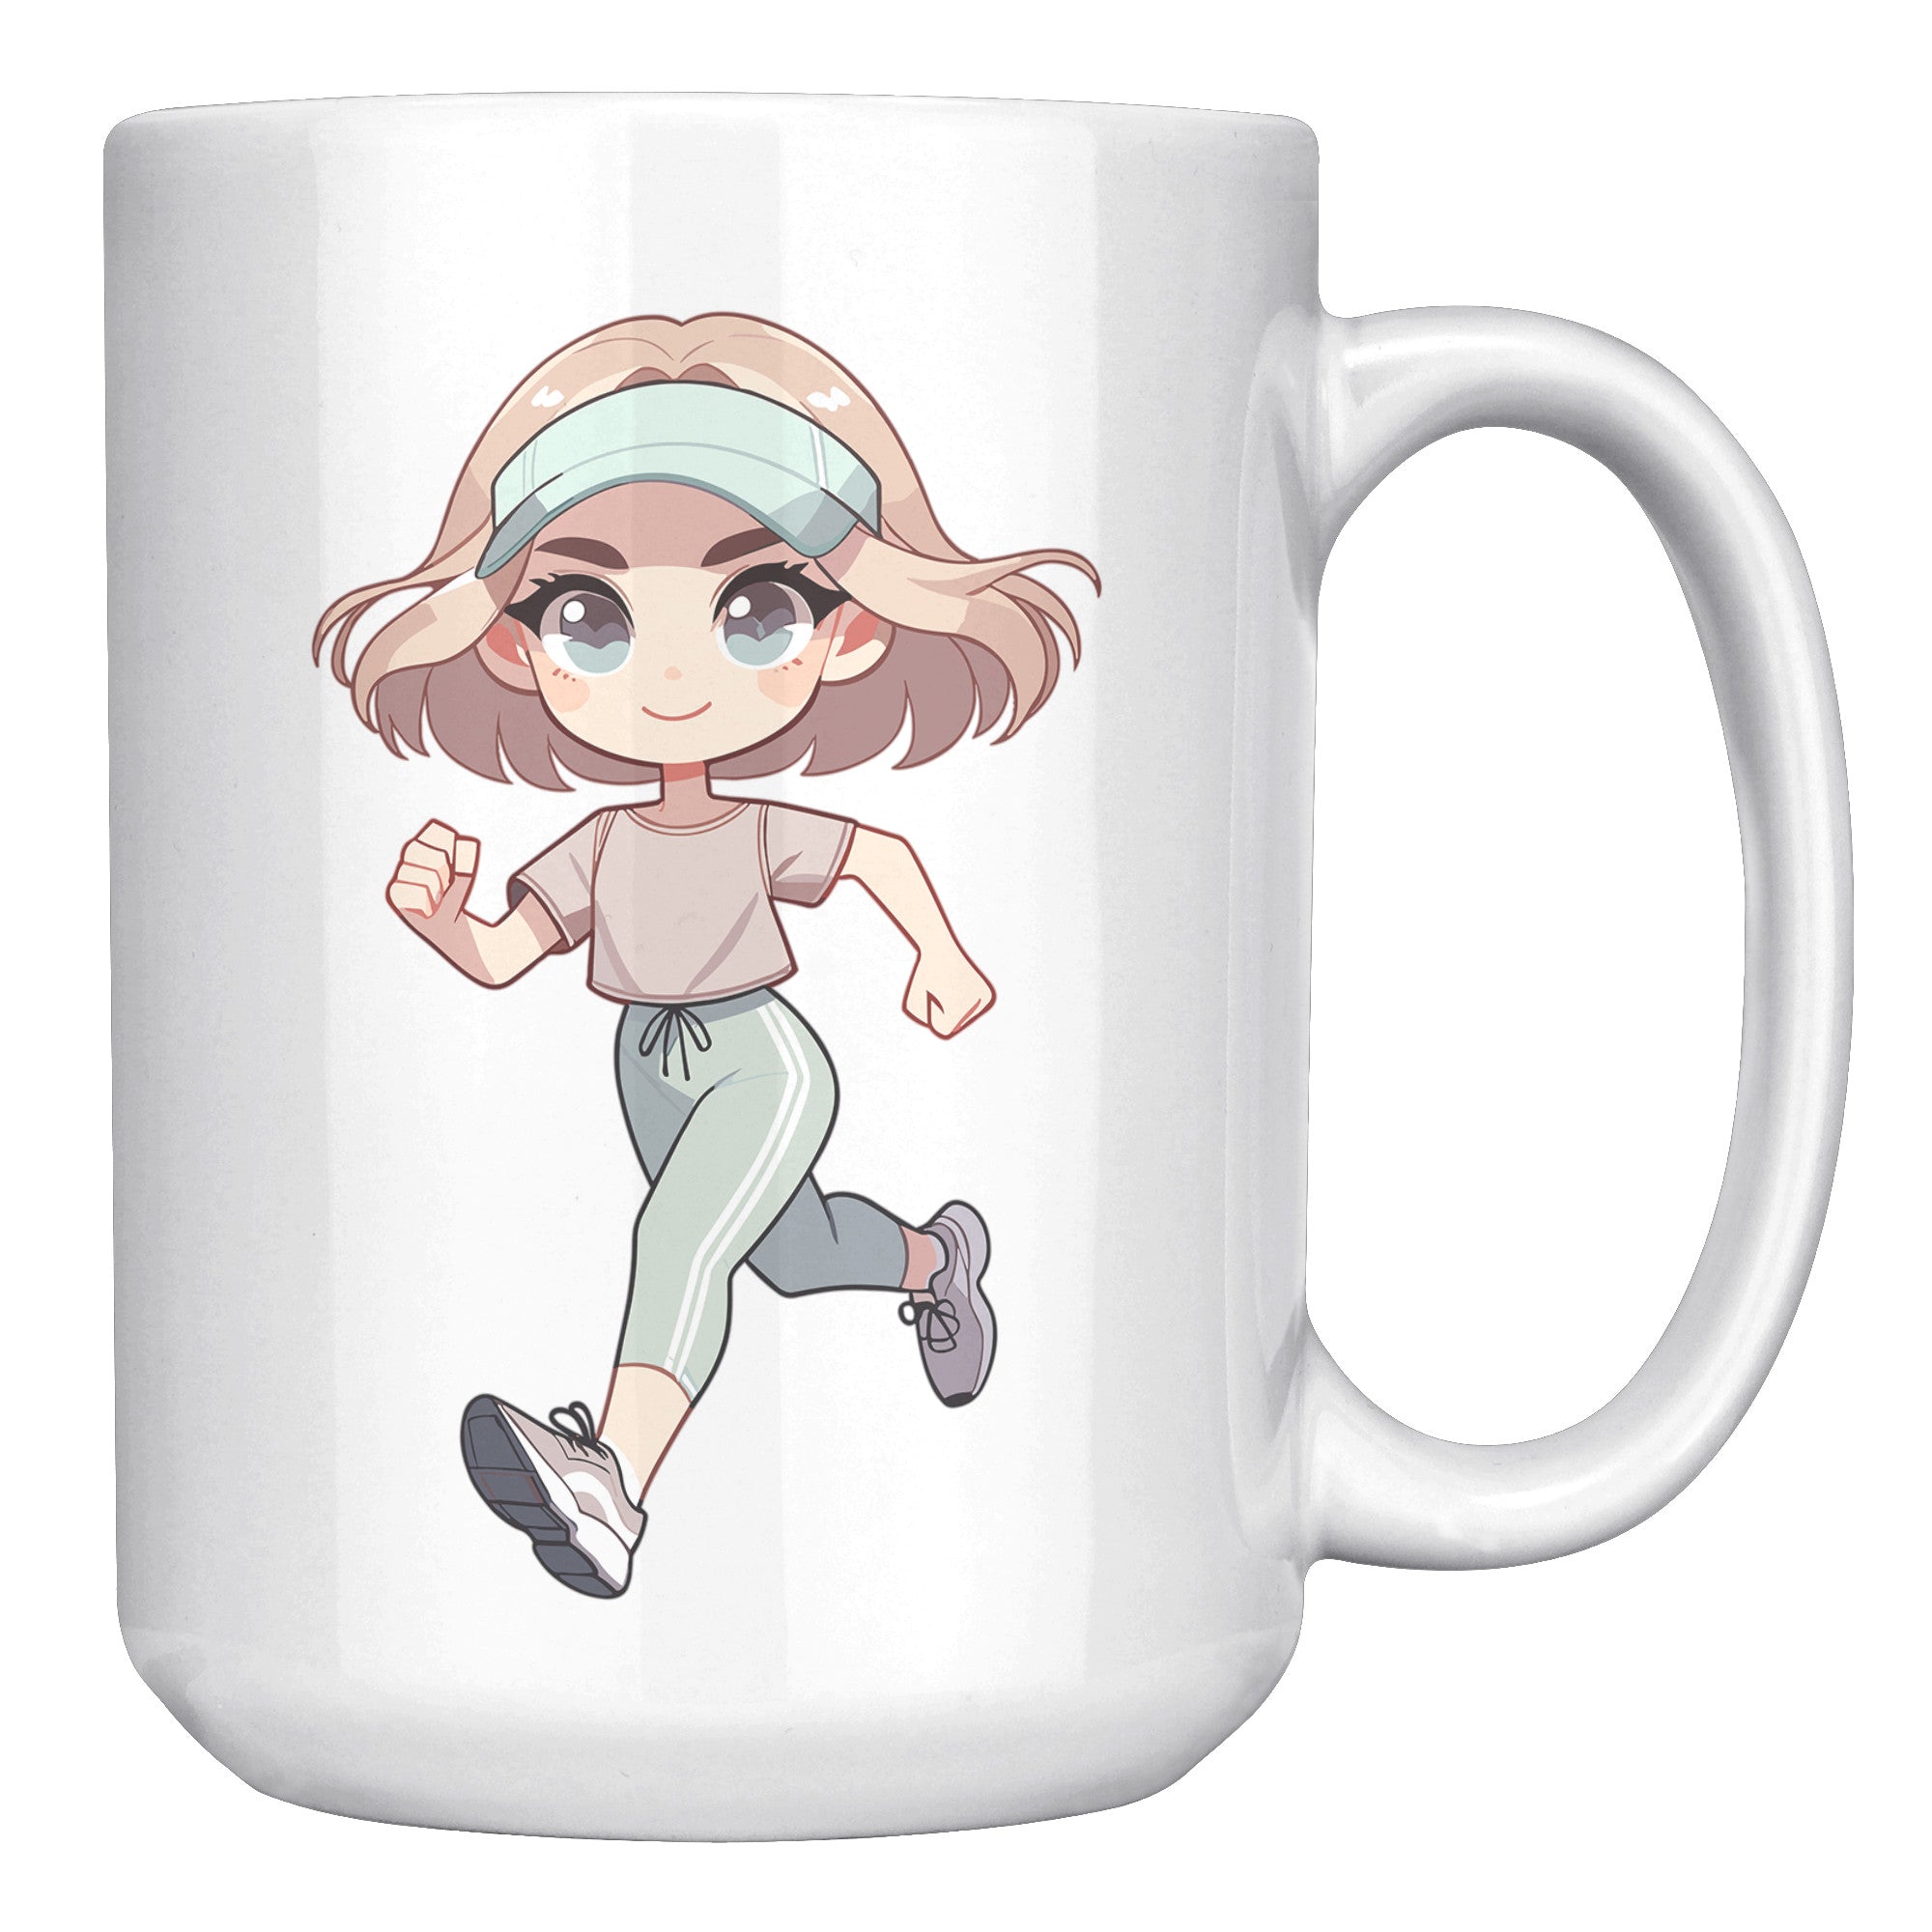 "Female Runner Coffee Mug - Inspirational Running Quotes Cup - Perfect Gift for Women Runners - Motivational Marathoner's Morning Brew" - J1